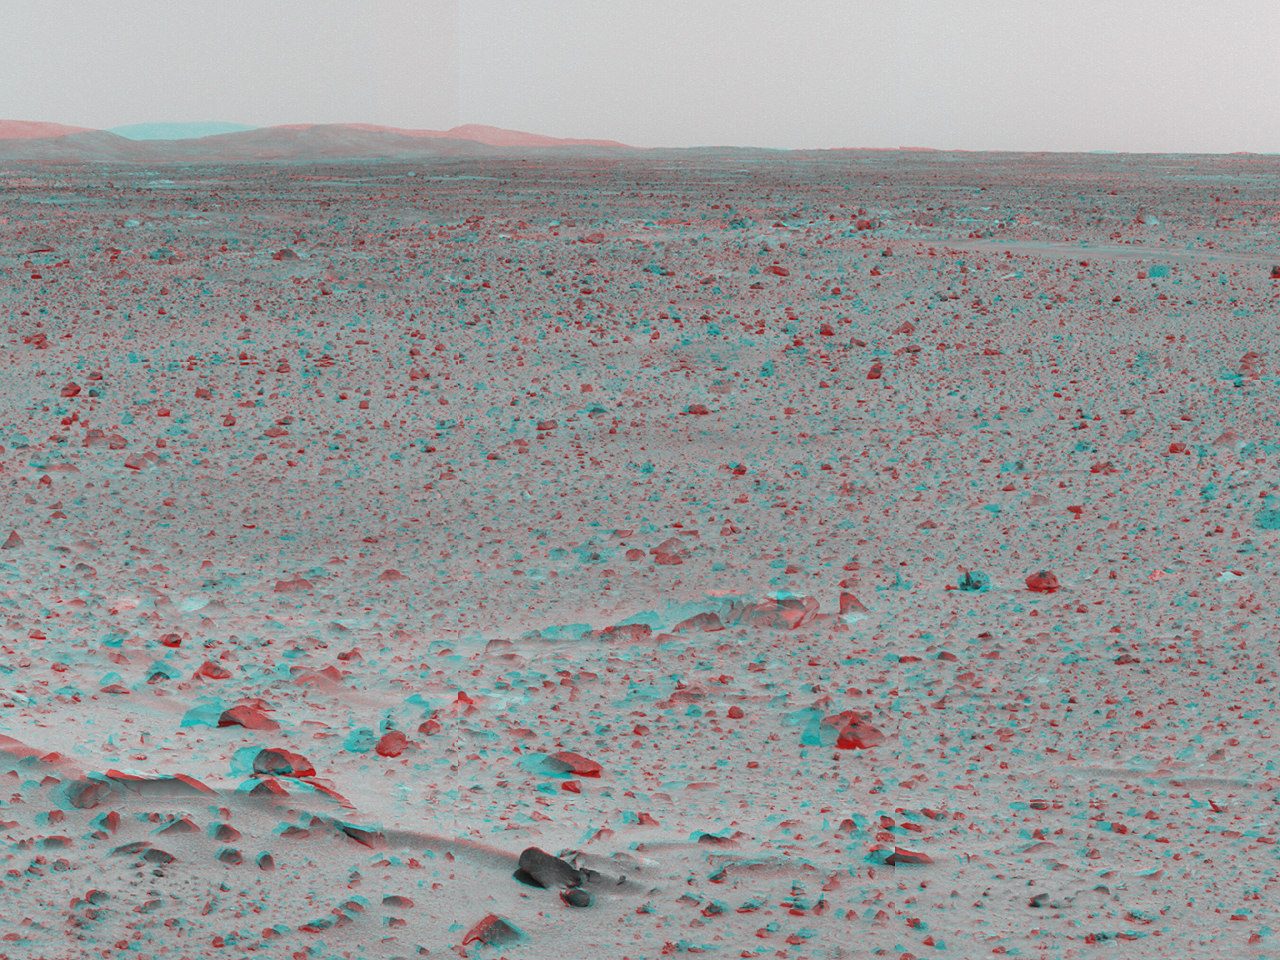 Mars_3DLandscape10